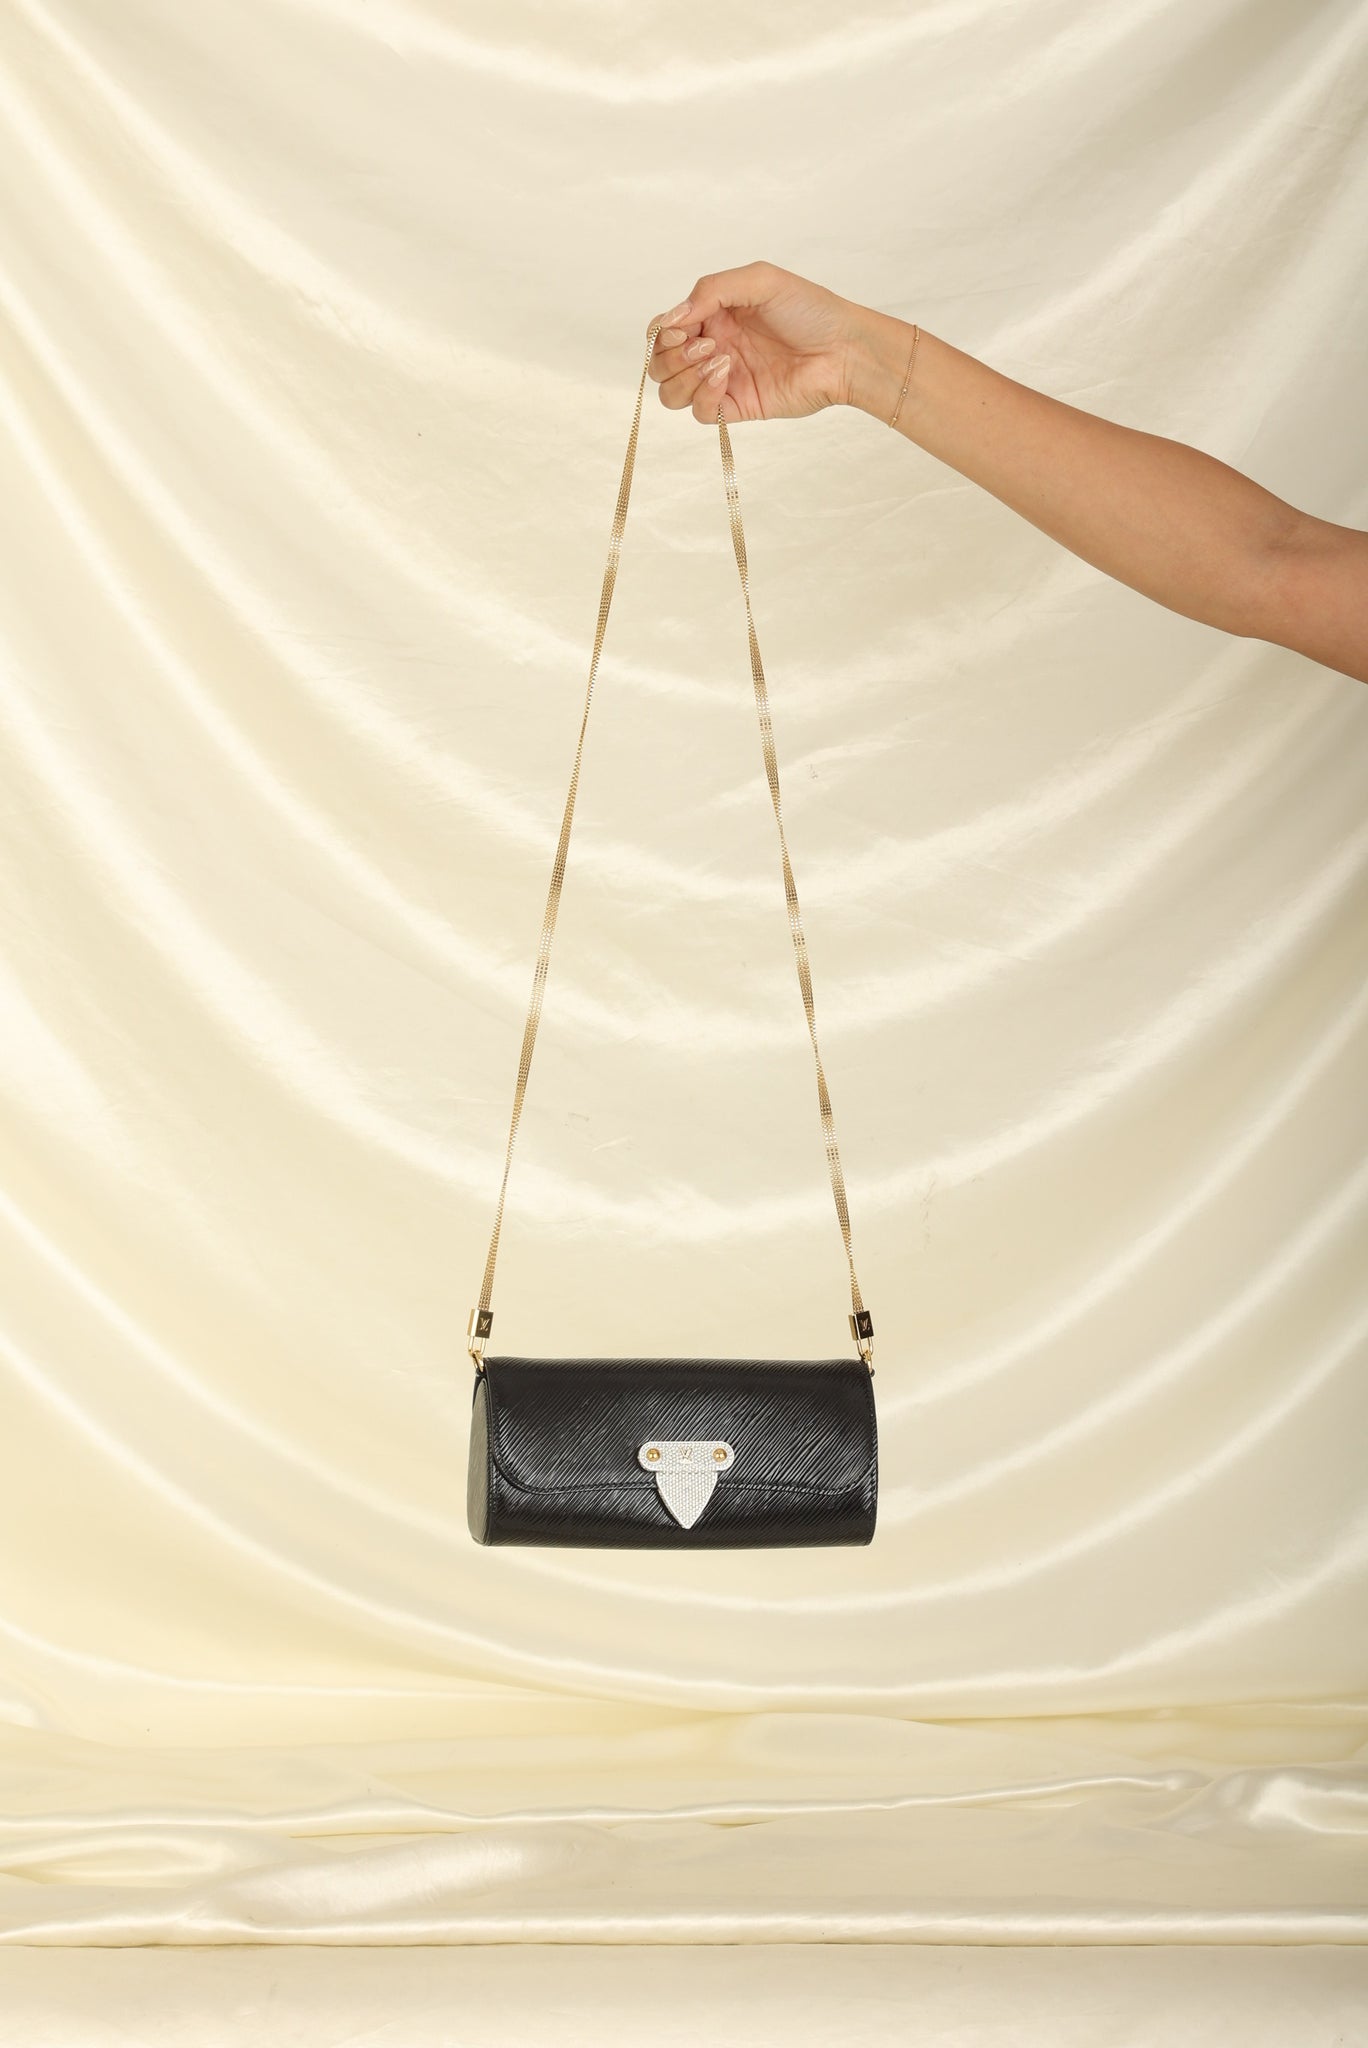 Ultra-Rare Louis Vuitton 2017 Electric Epi Crystal Chain Bag